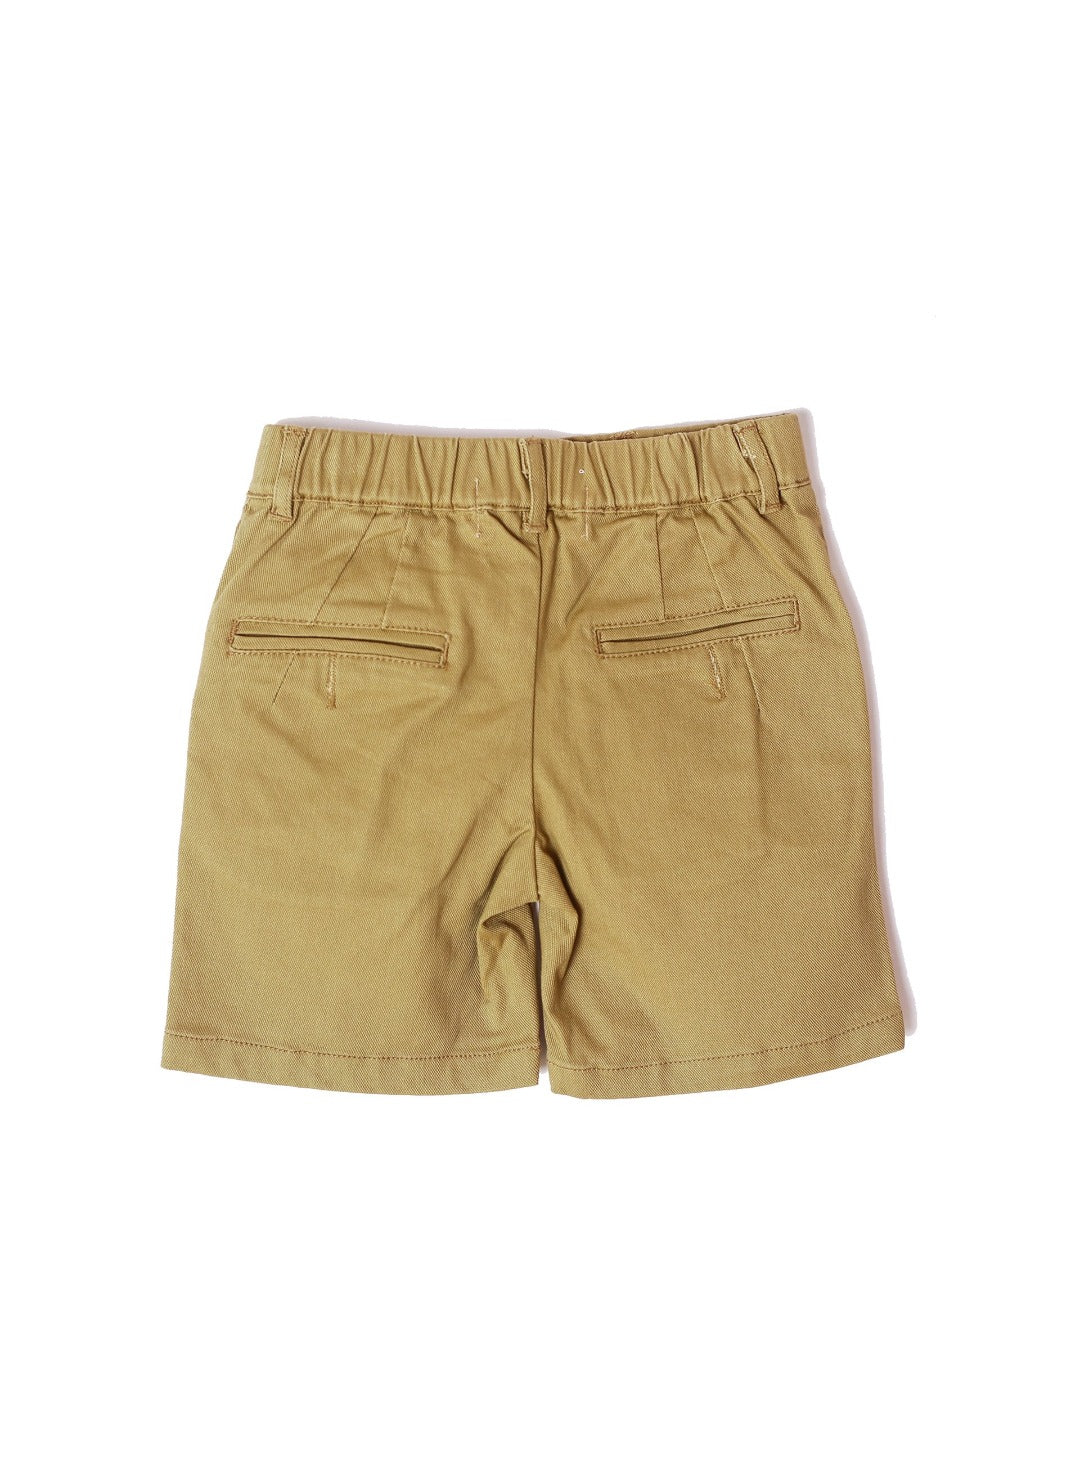 tan colour above knee shorts